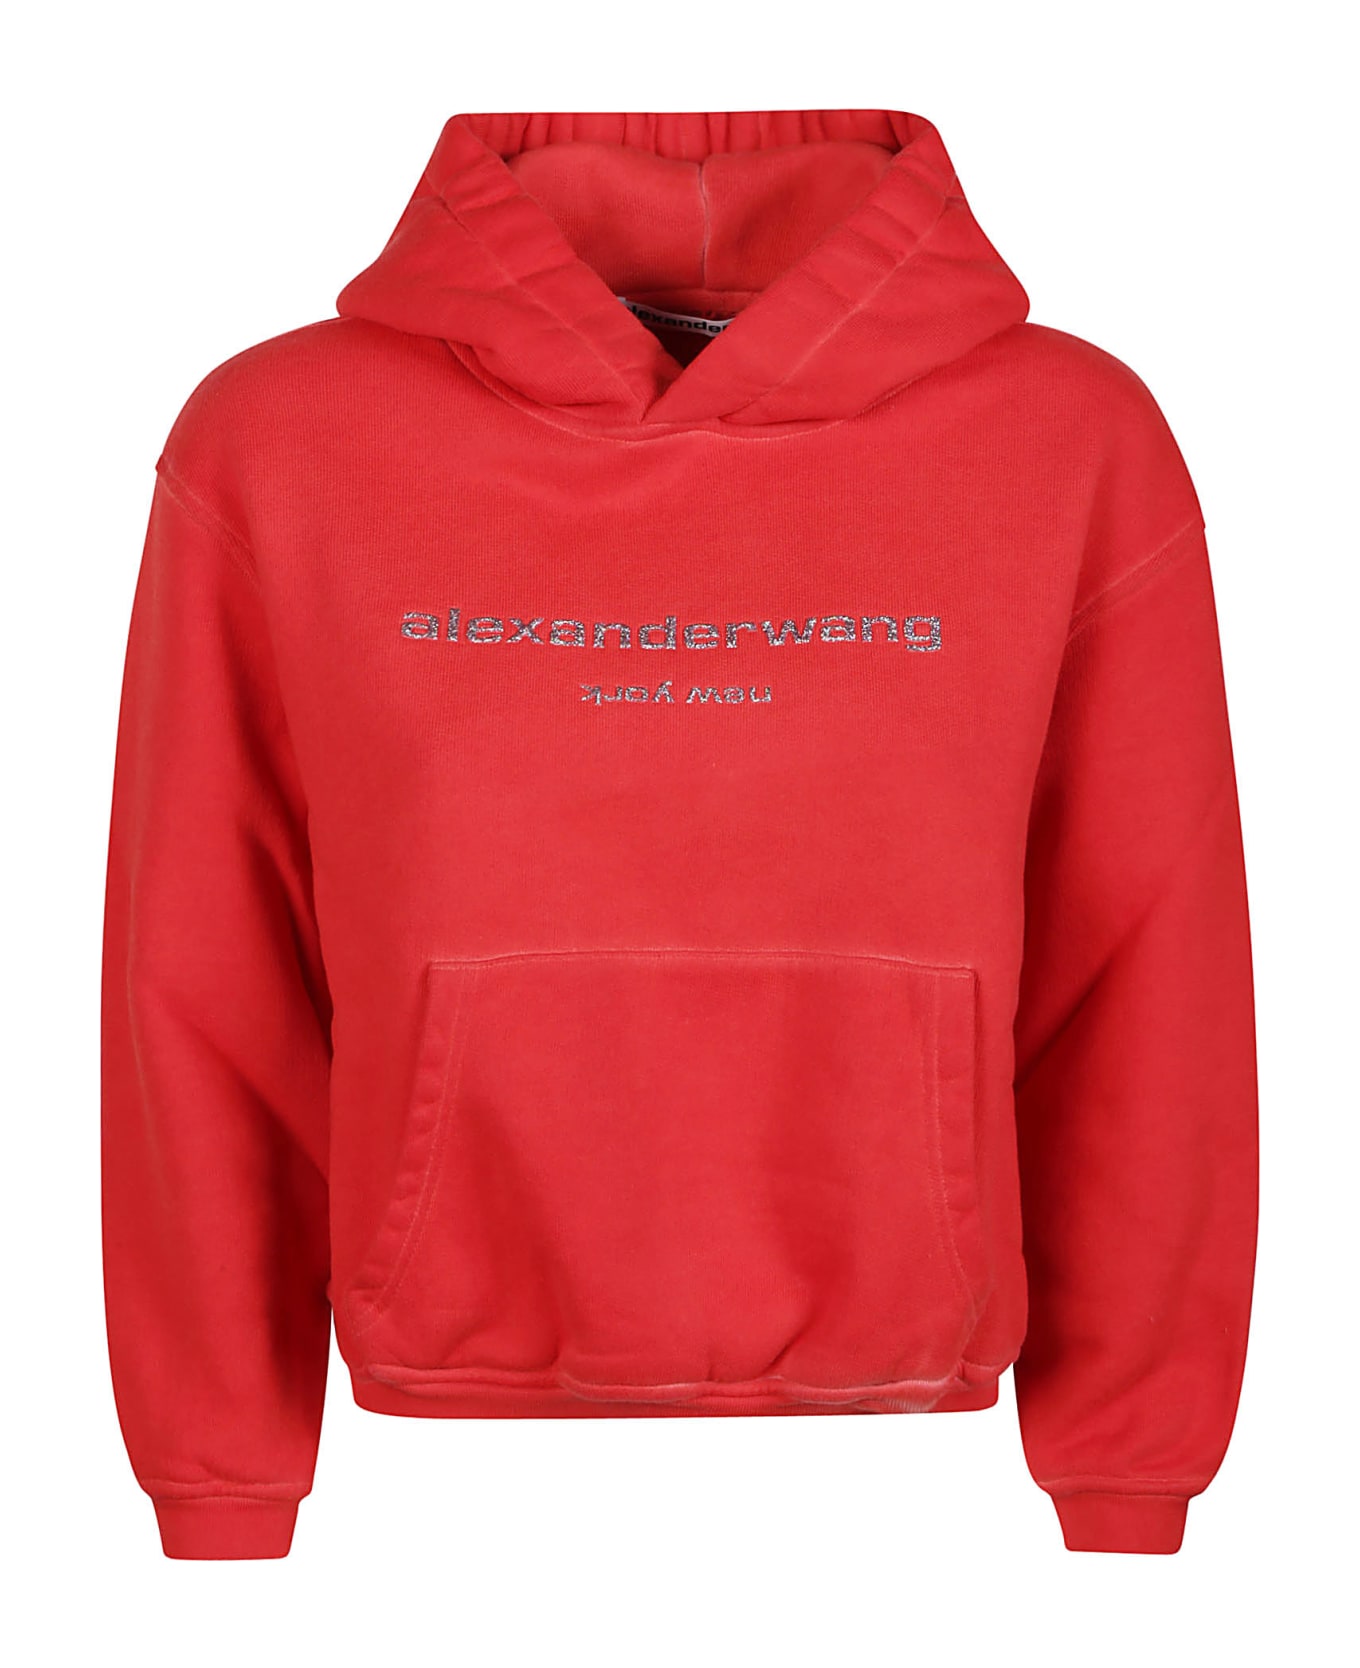 Alexander Wang Glitter Puff Logo Bi-color Shrunken Sweatshirt - A Fiery Red Combo